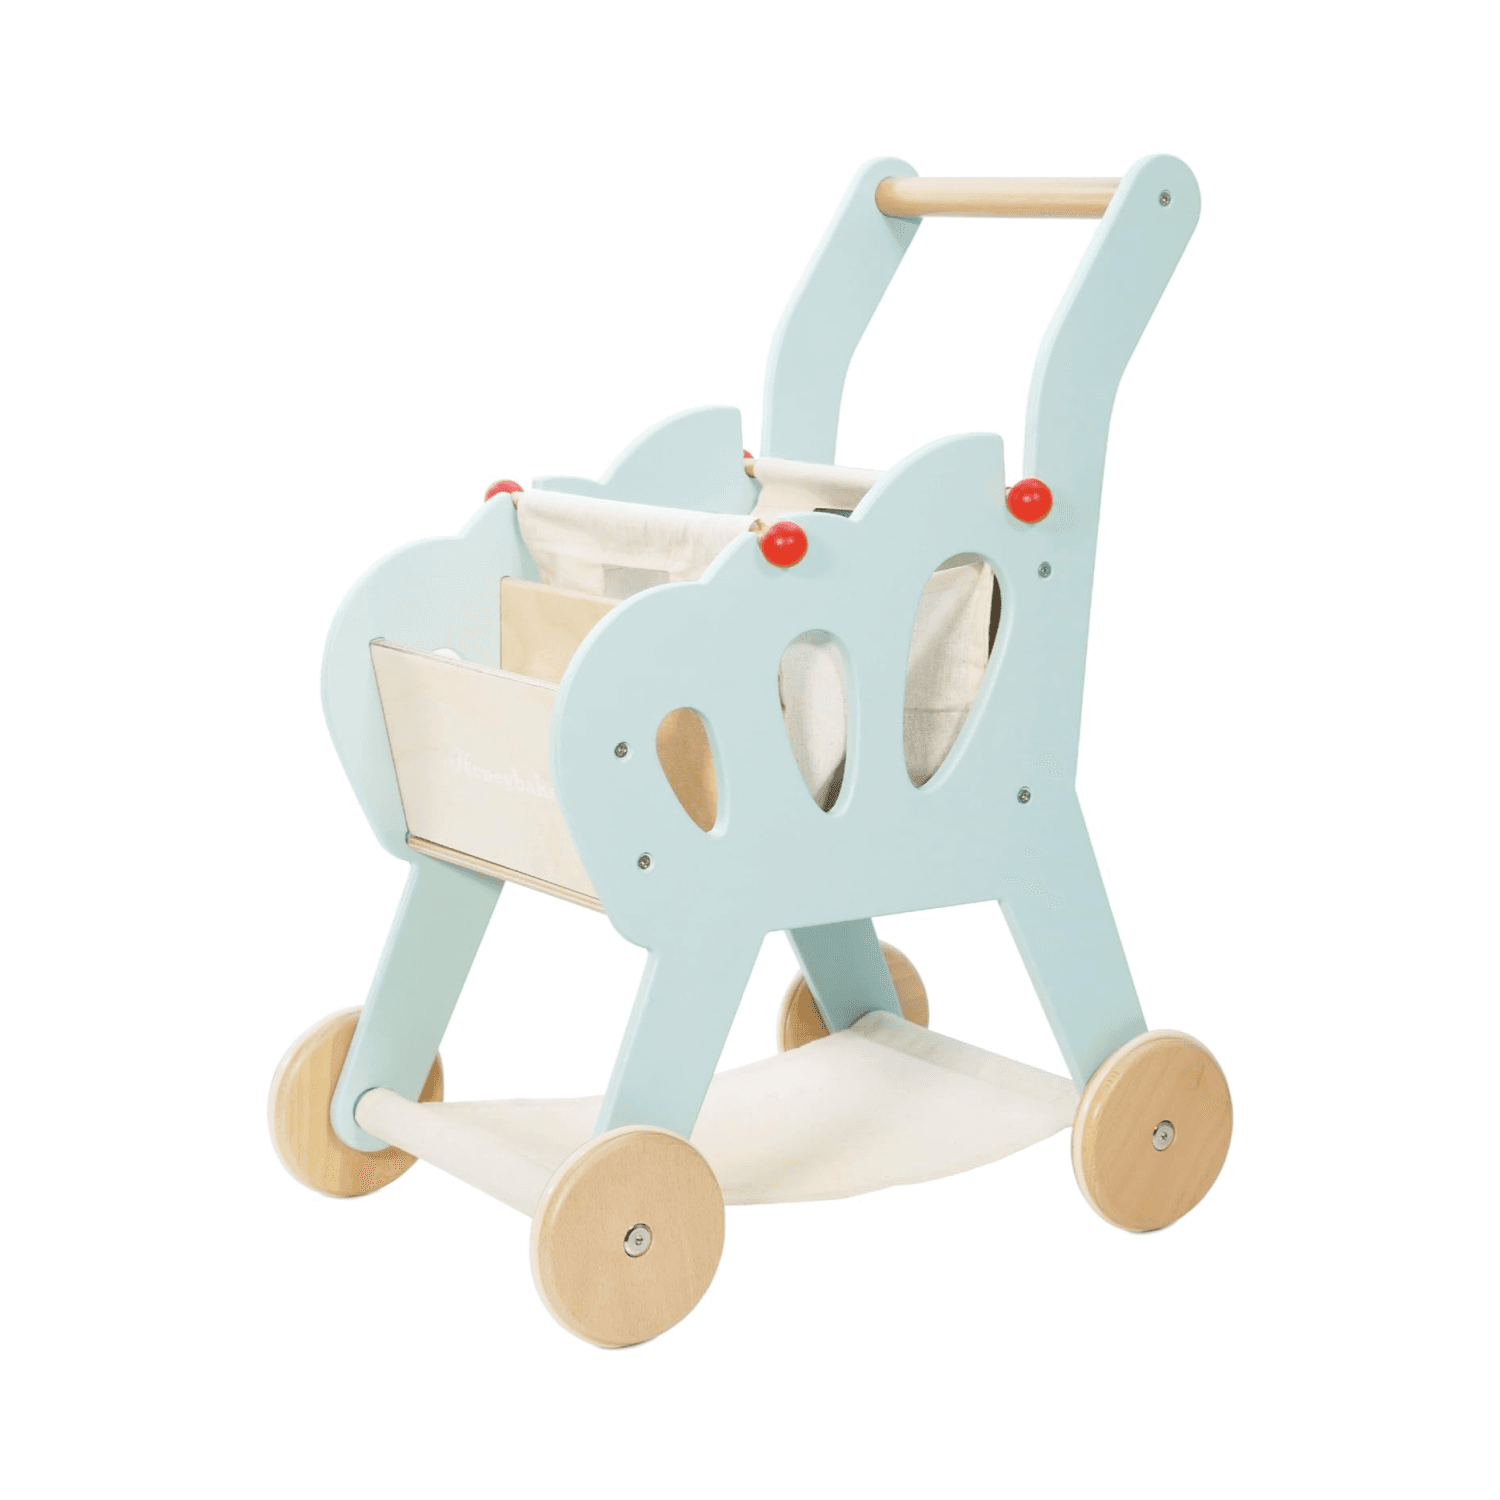 Montessori Le Toy Van Shopping Cart